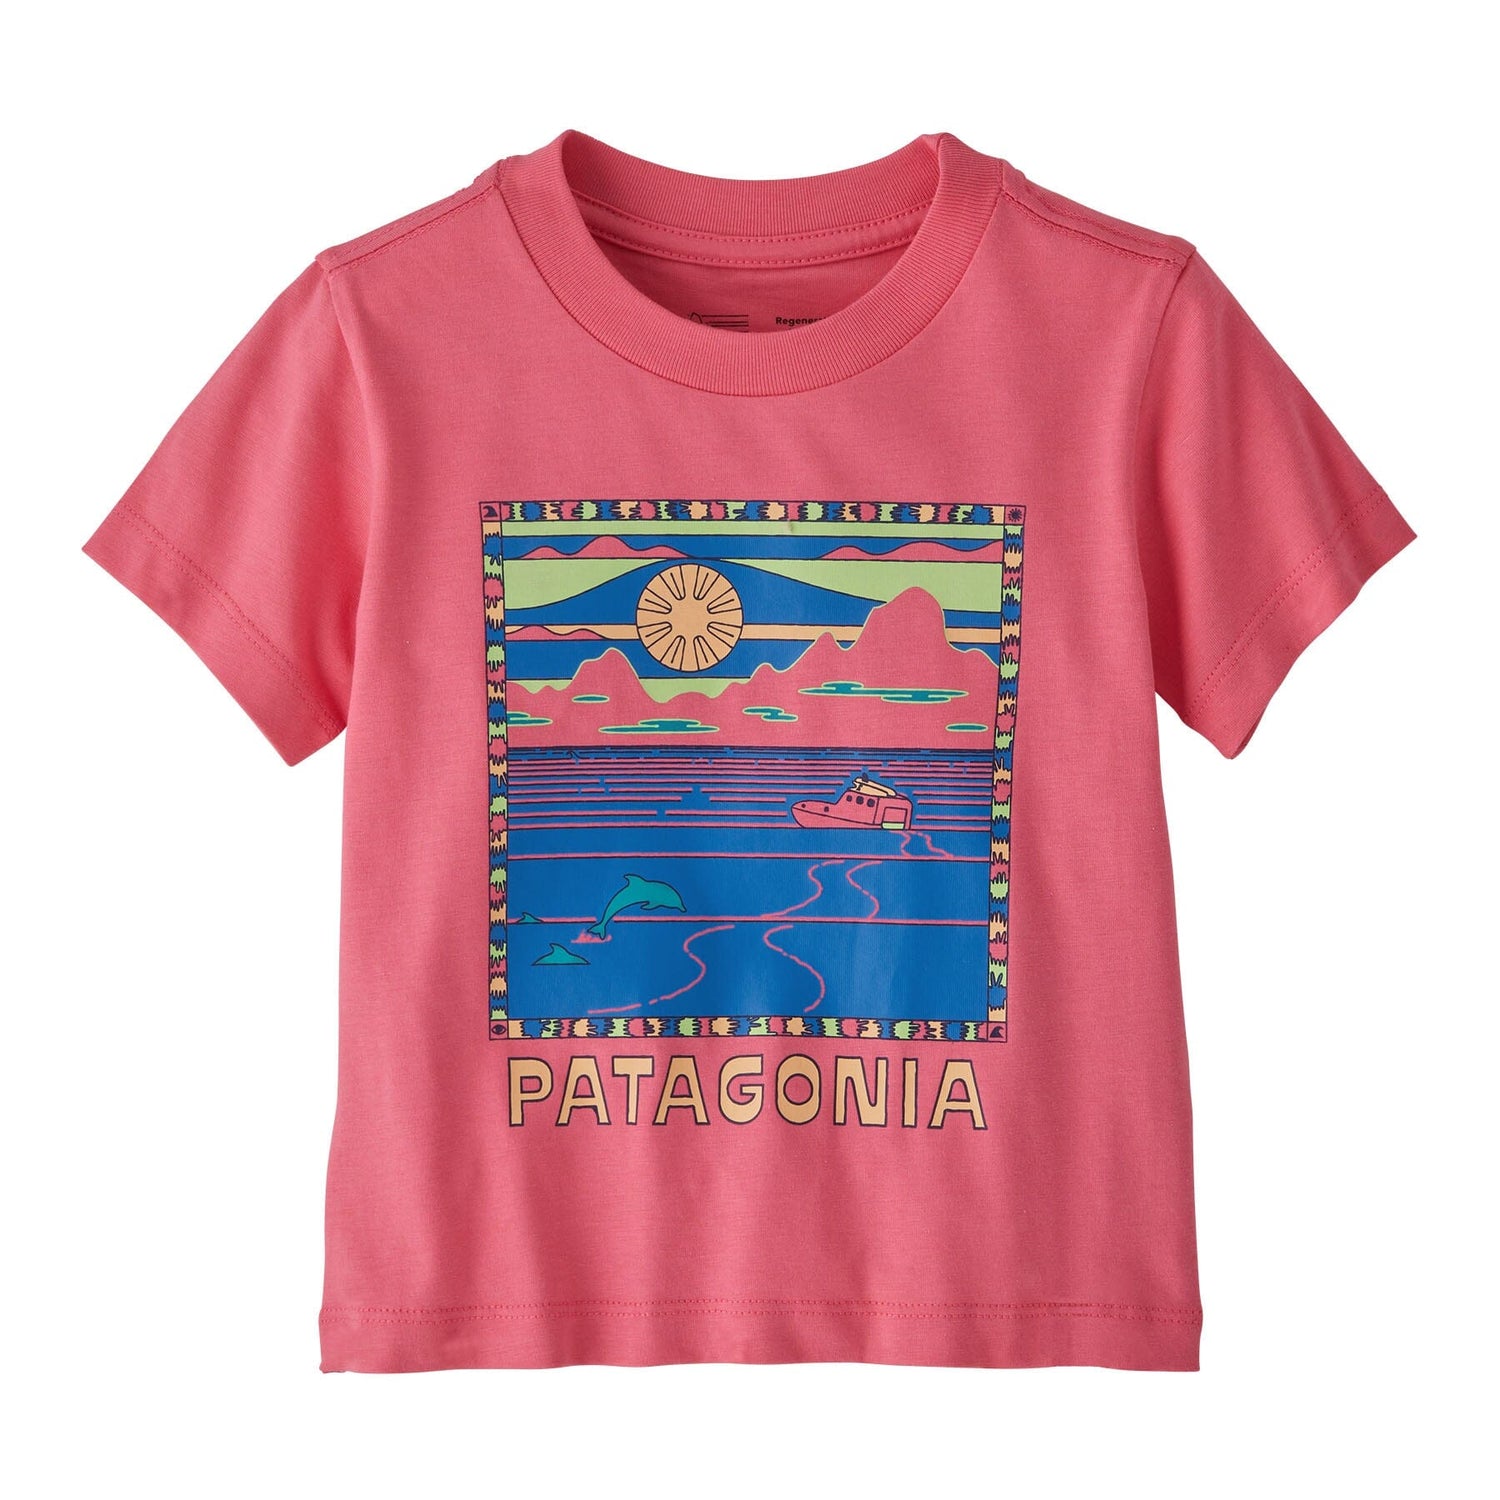 Patagonia - Kids Graphic T-Shirt - 100% Regenerative Organic Certified™ cotton - Weekendbee - sustainable sportswear